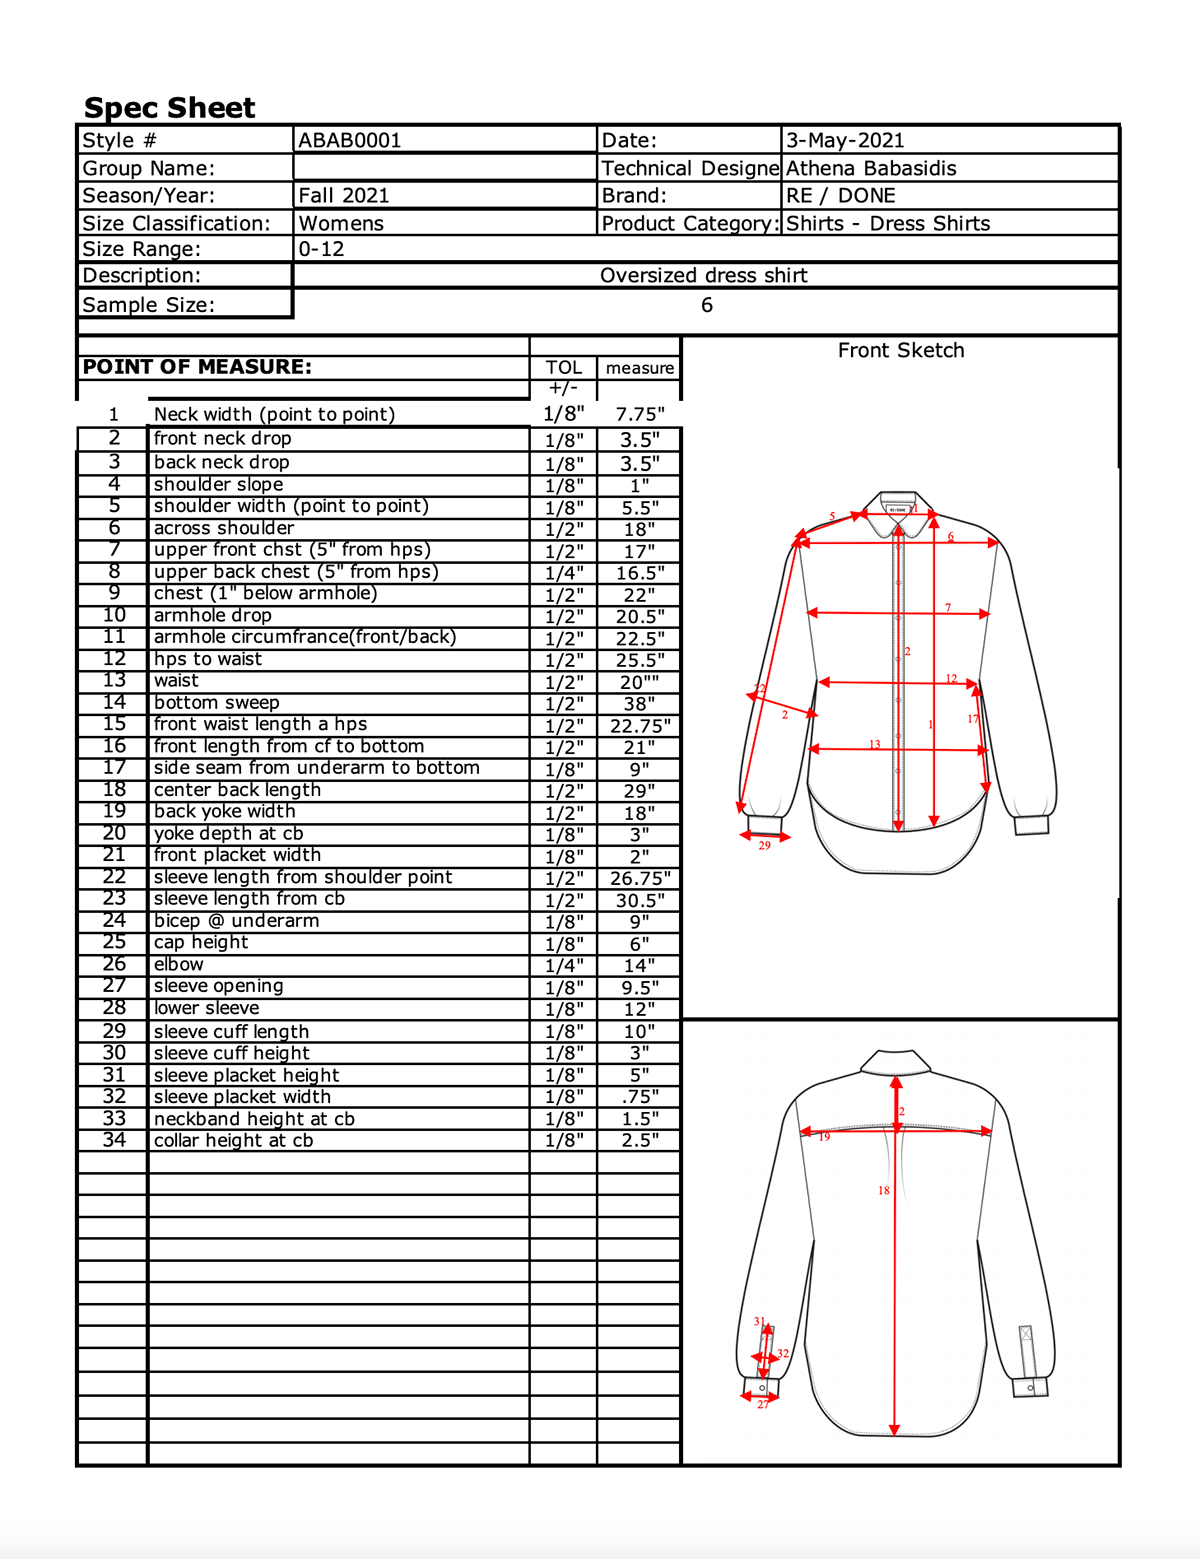 Cost sheet design Fashion  fashion design Flats ILLUSTRATION  Microsoft Excel TECH PACKS Technical Design